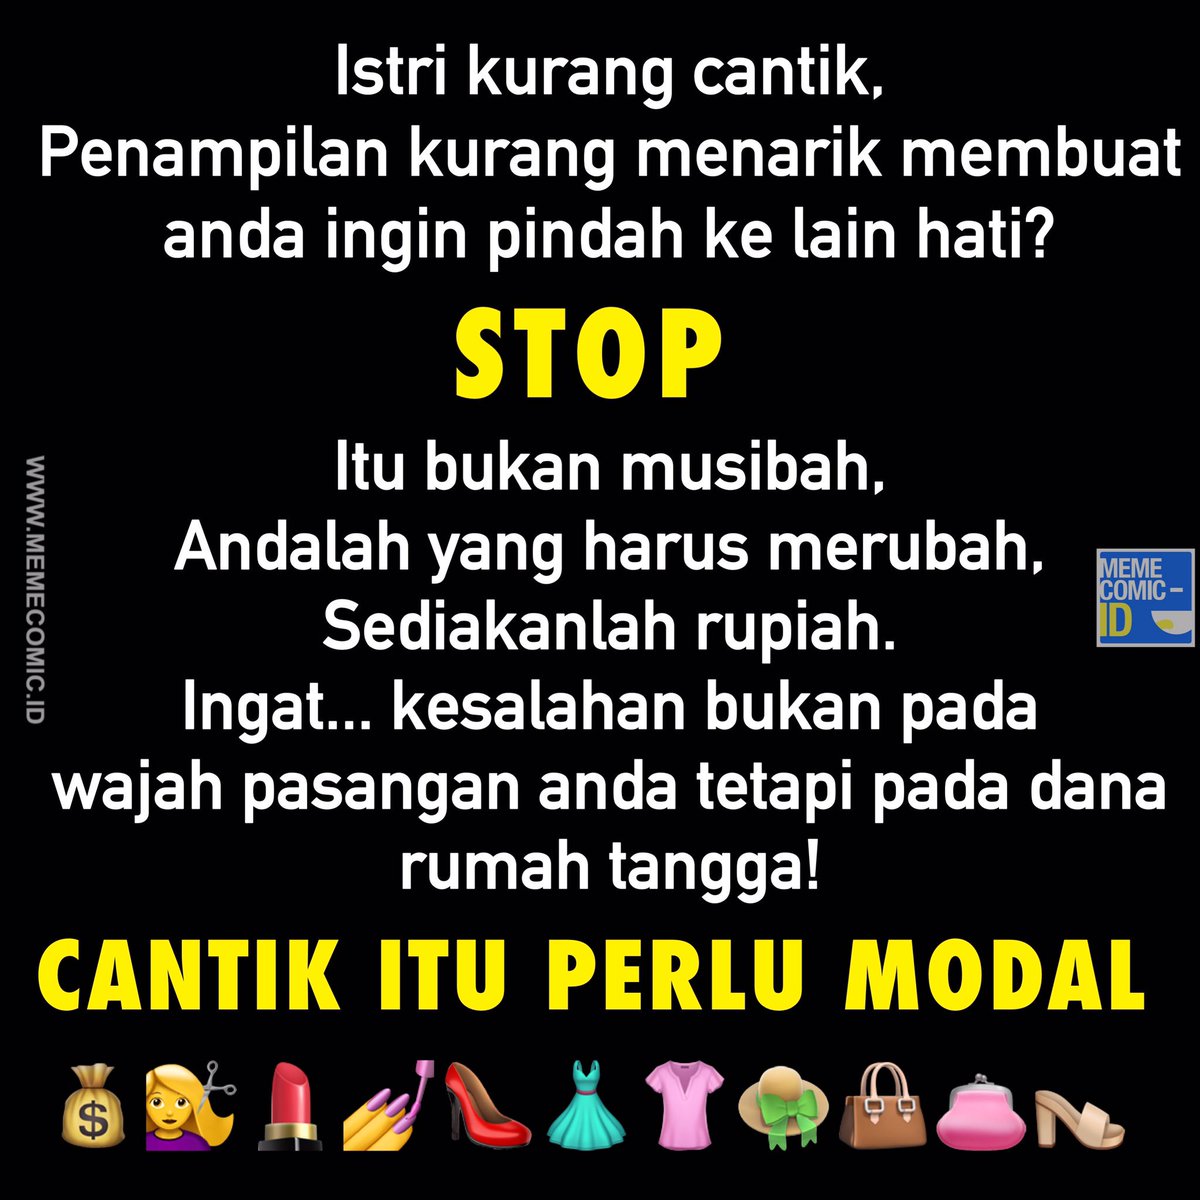 Meme Comic Indonesia On Twitter Cantik Itu Perlu Modal Upload